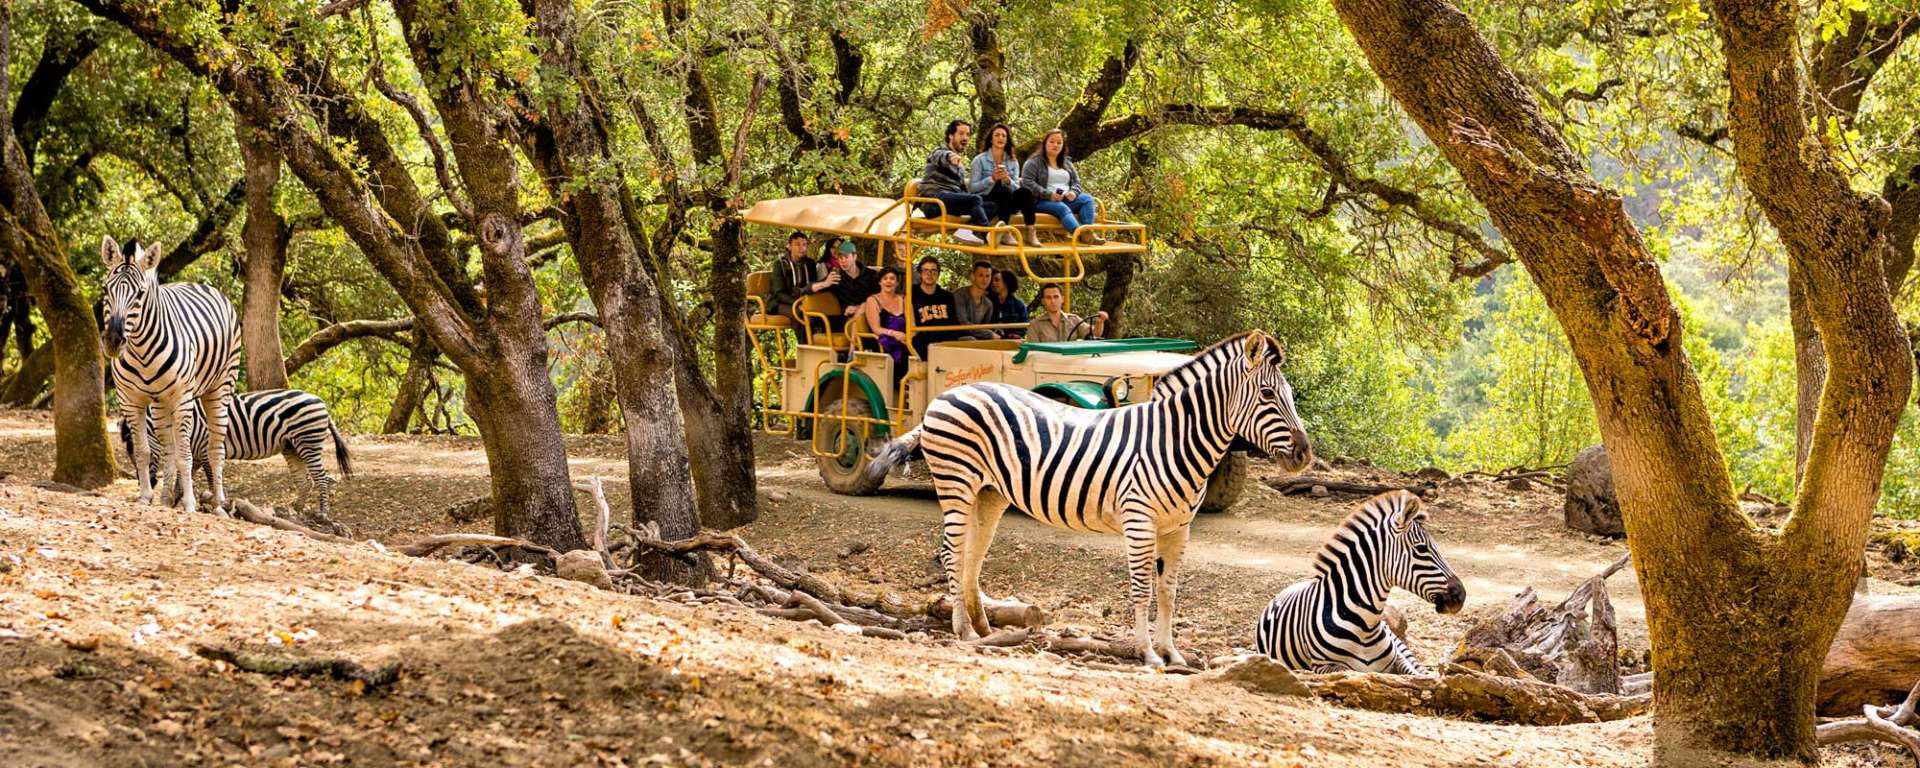 Safari with zebra by Ray Mabry